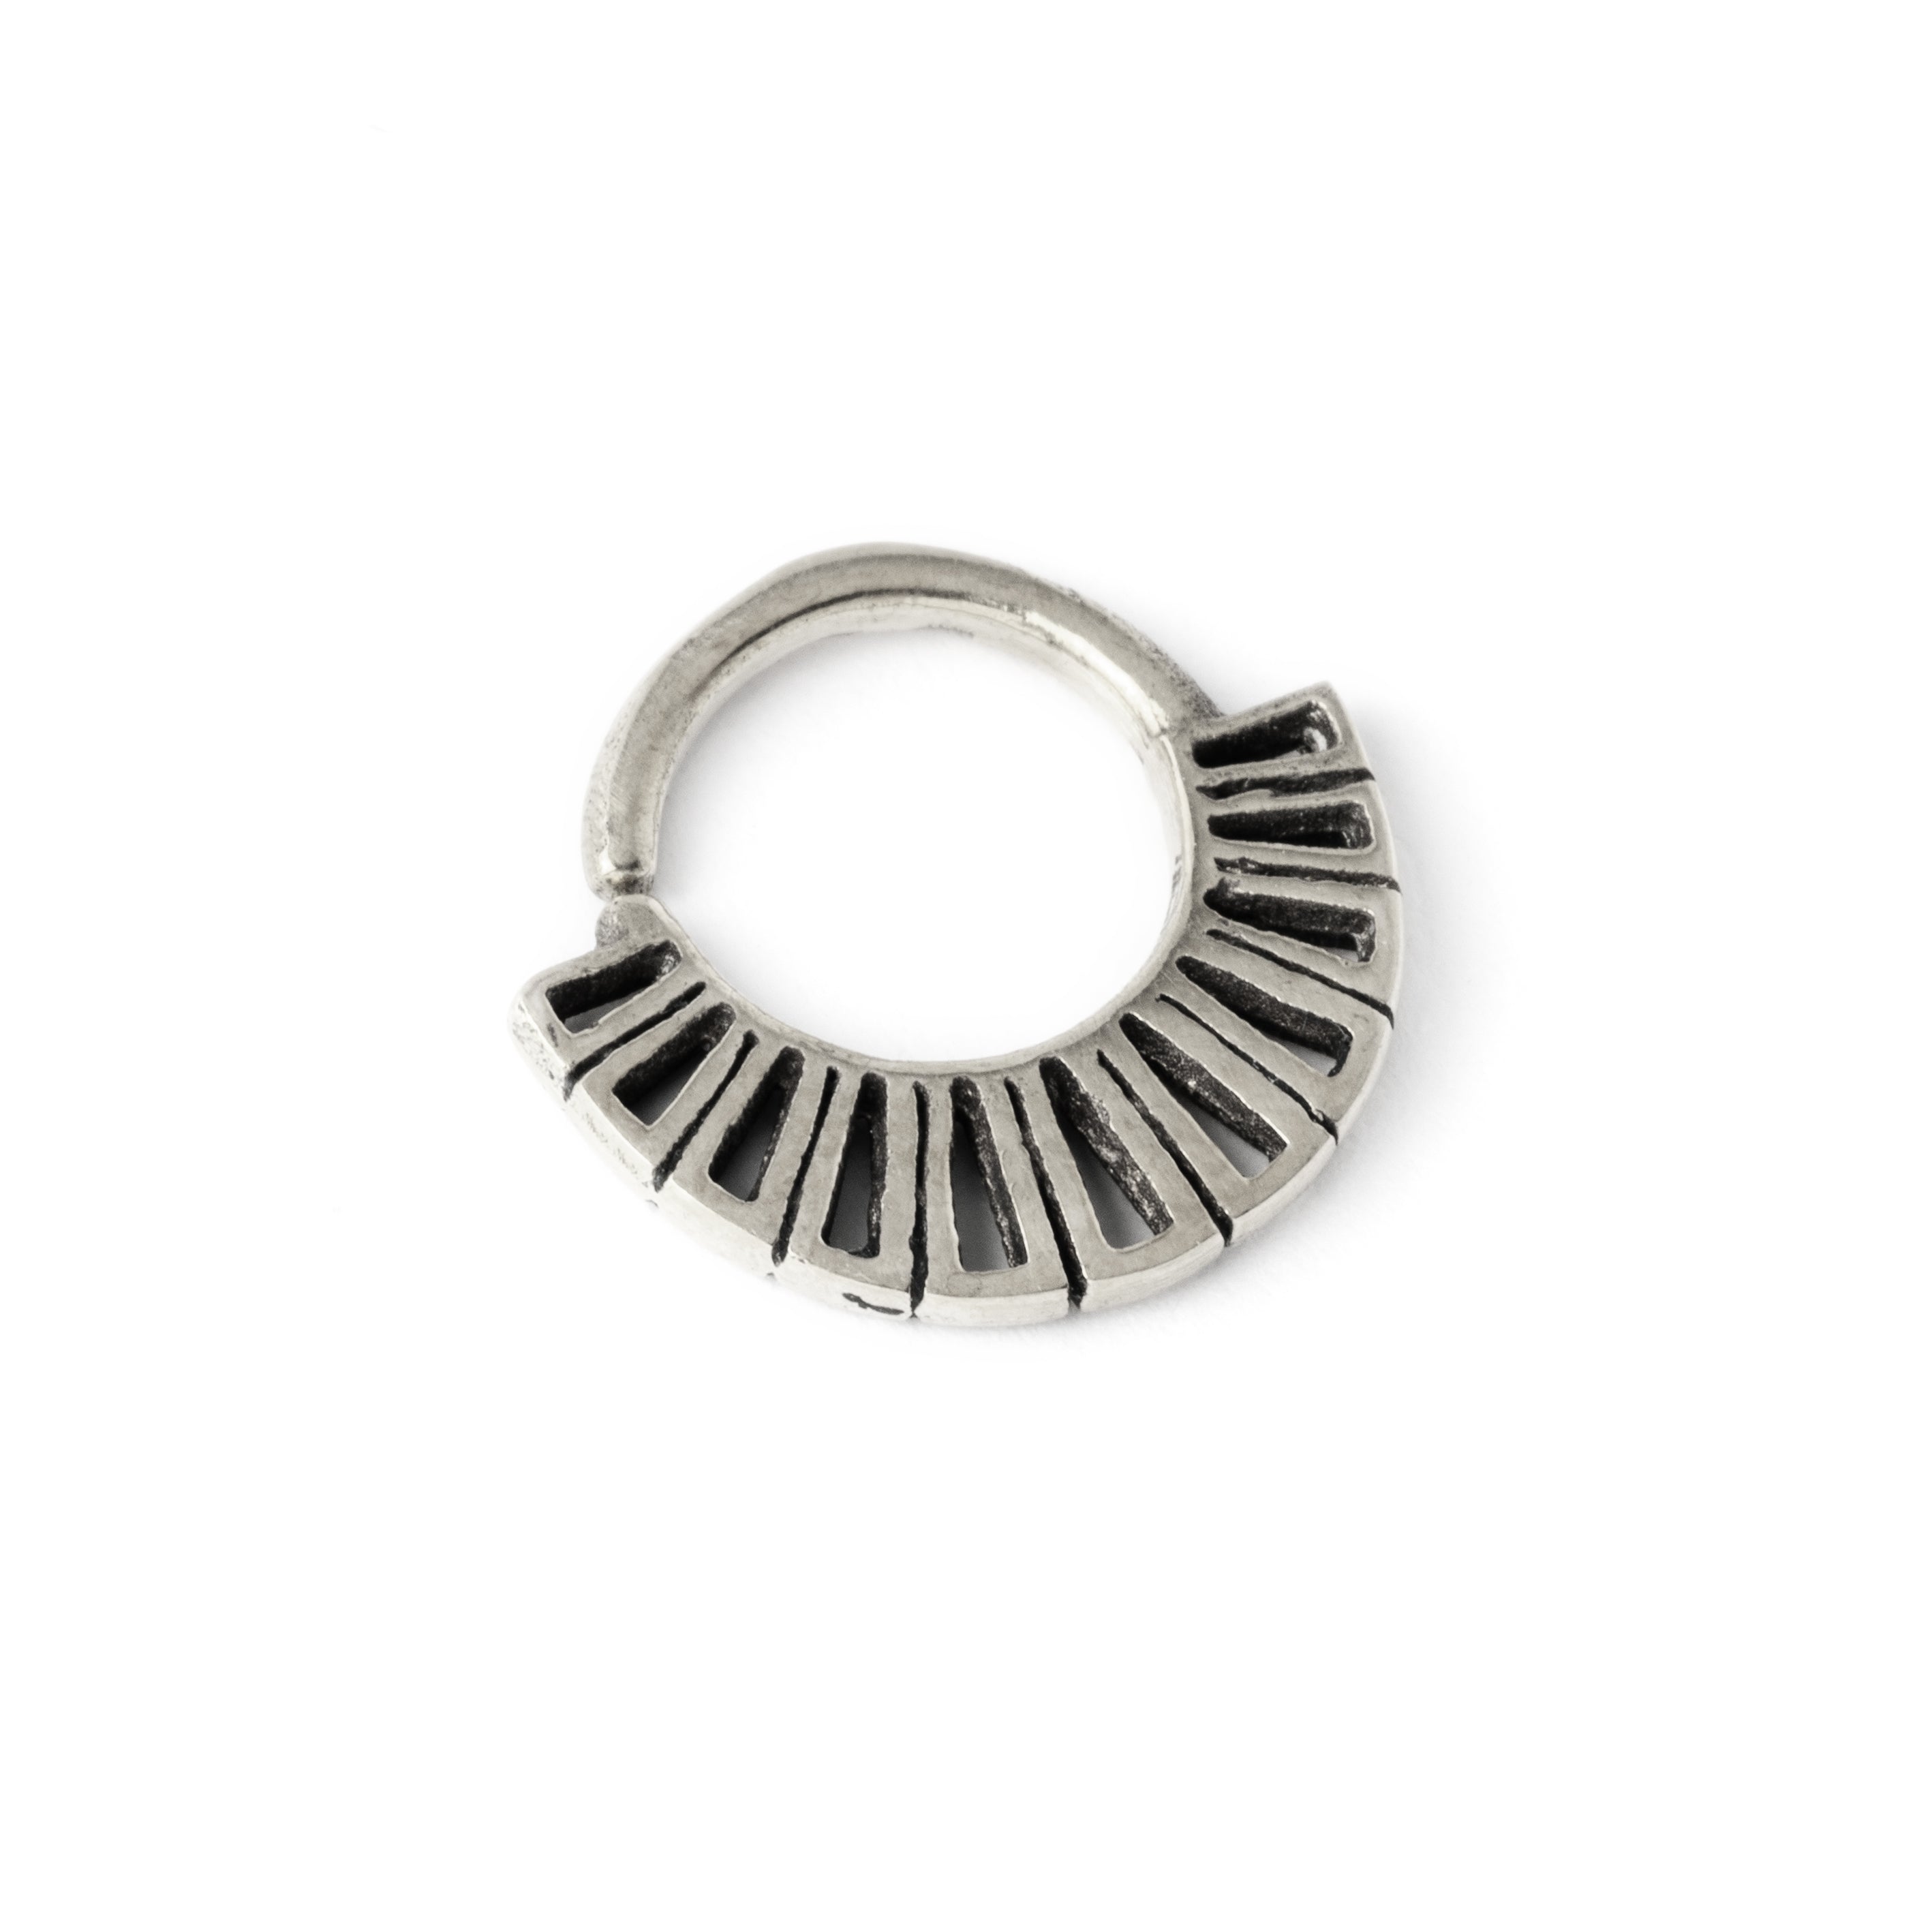 Aditi 18g (1mm) Silver tribal geometric septum piercing ring right side view